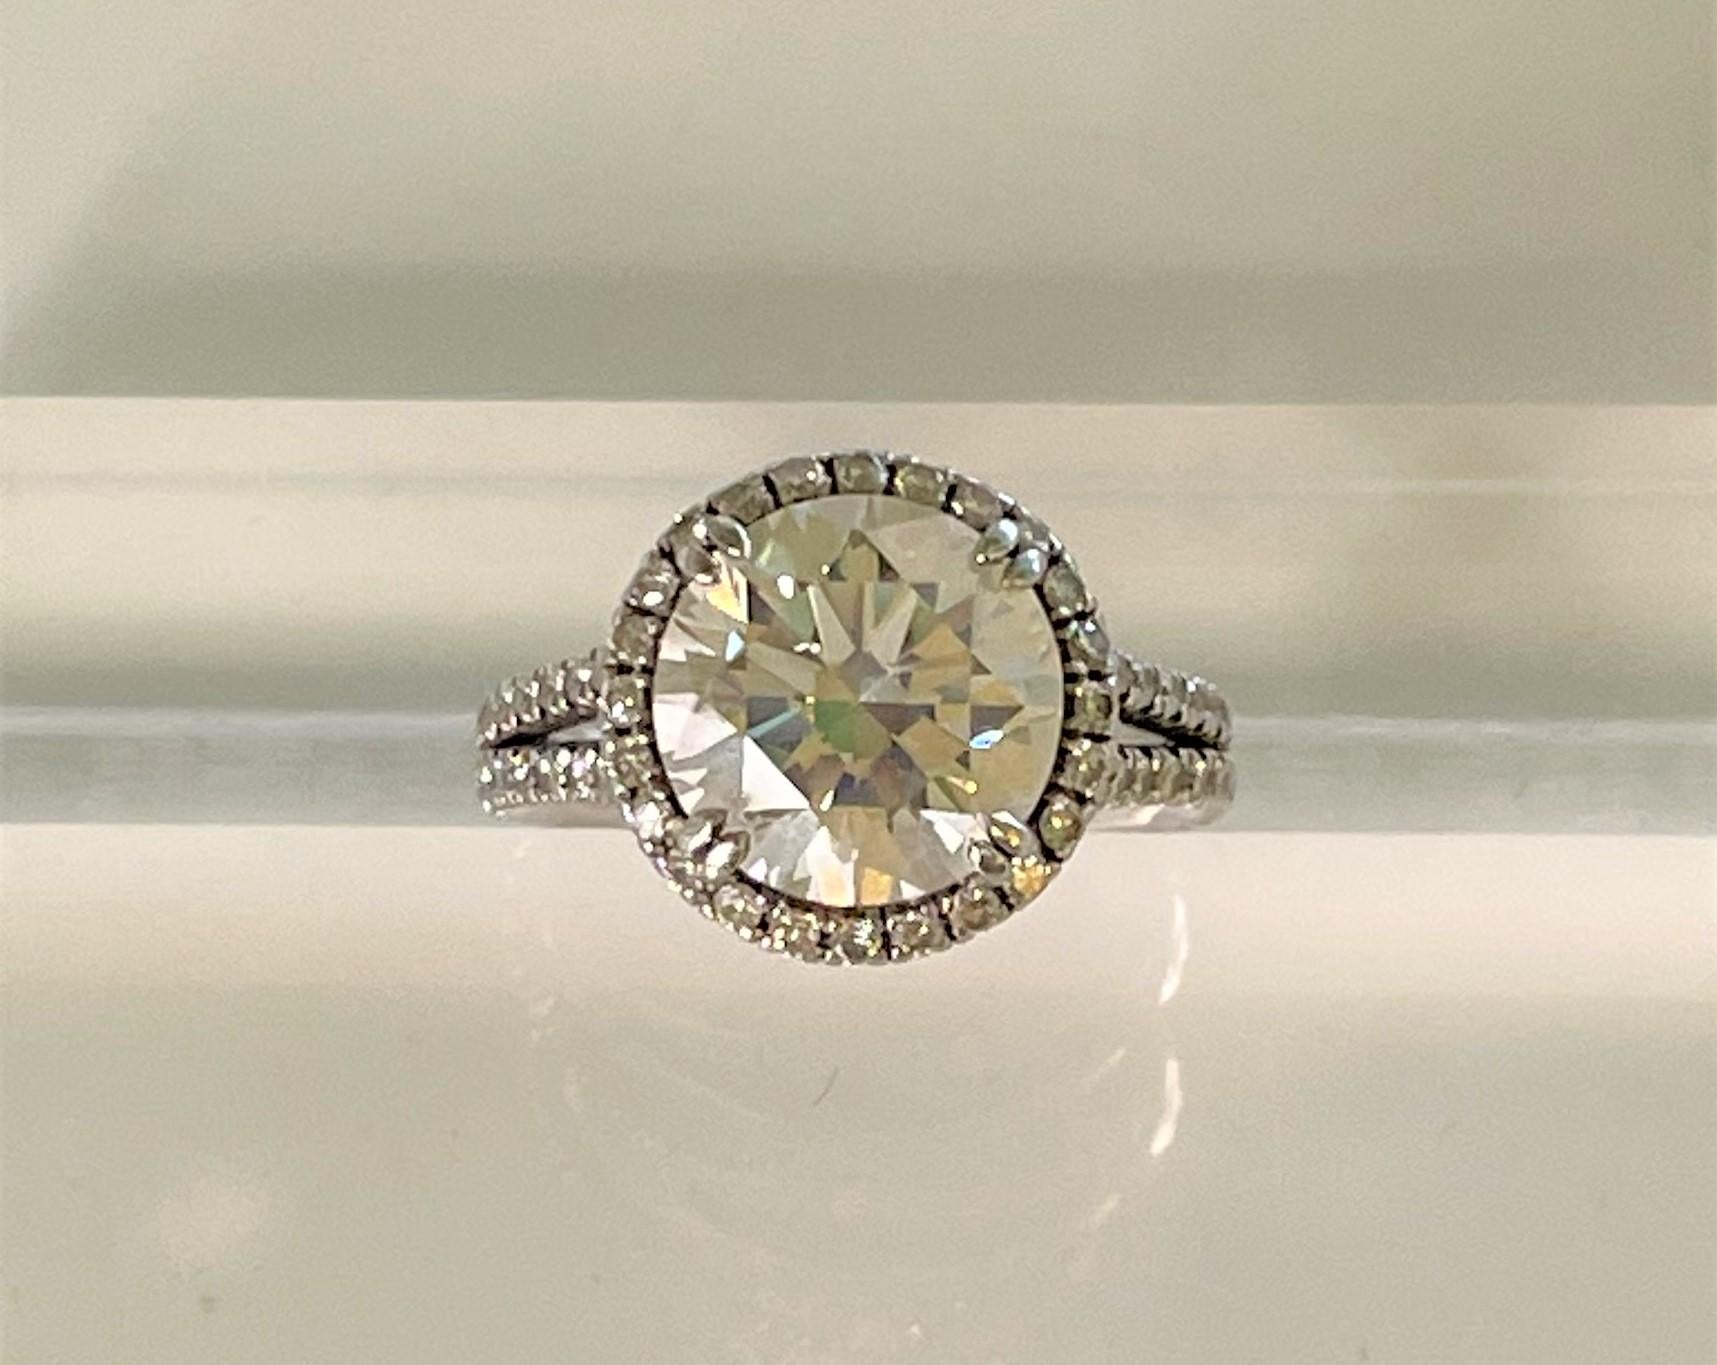 Beautiful, big diamond ring!
4.67ct (estimated weight) round brilliant cut diamond.  Approximately 10.58mm x 10.6mm x 6.82mm.  
     L color, I2 clarity
48 round brilliant cut diamonds.  Approximately .01ct each.  H-I color, SI1-SI2 clarity 
14K